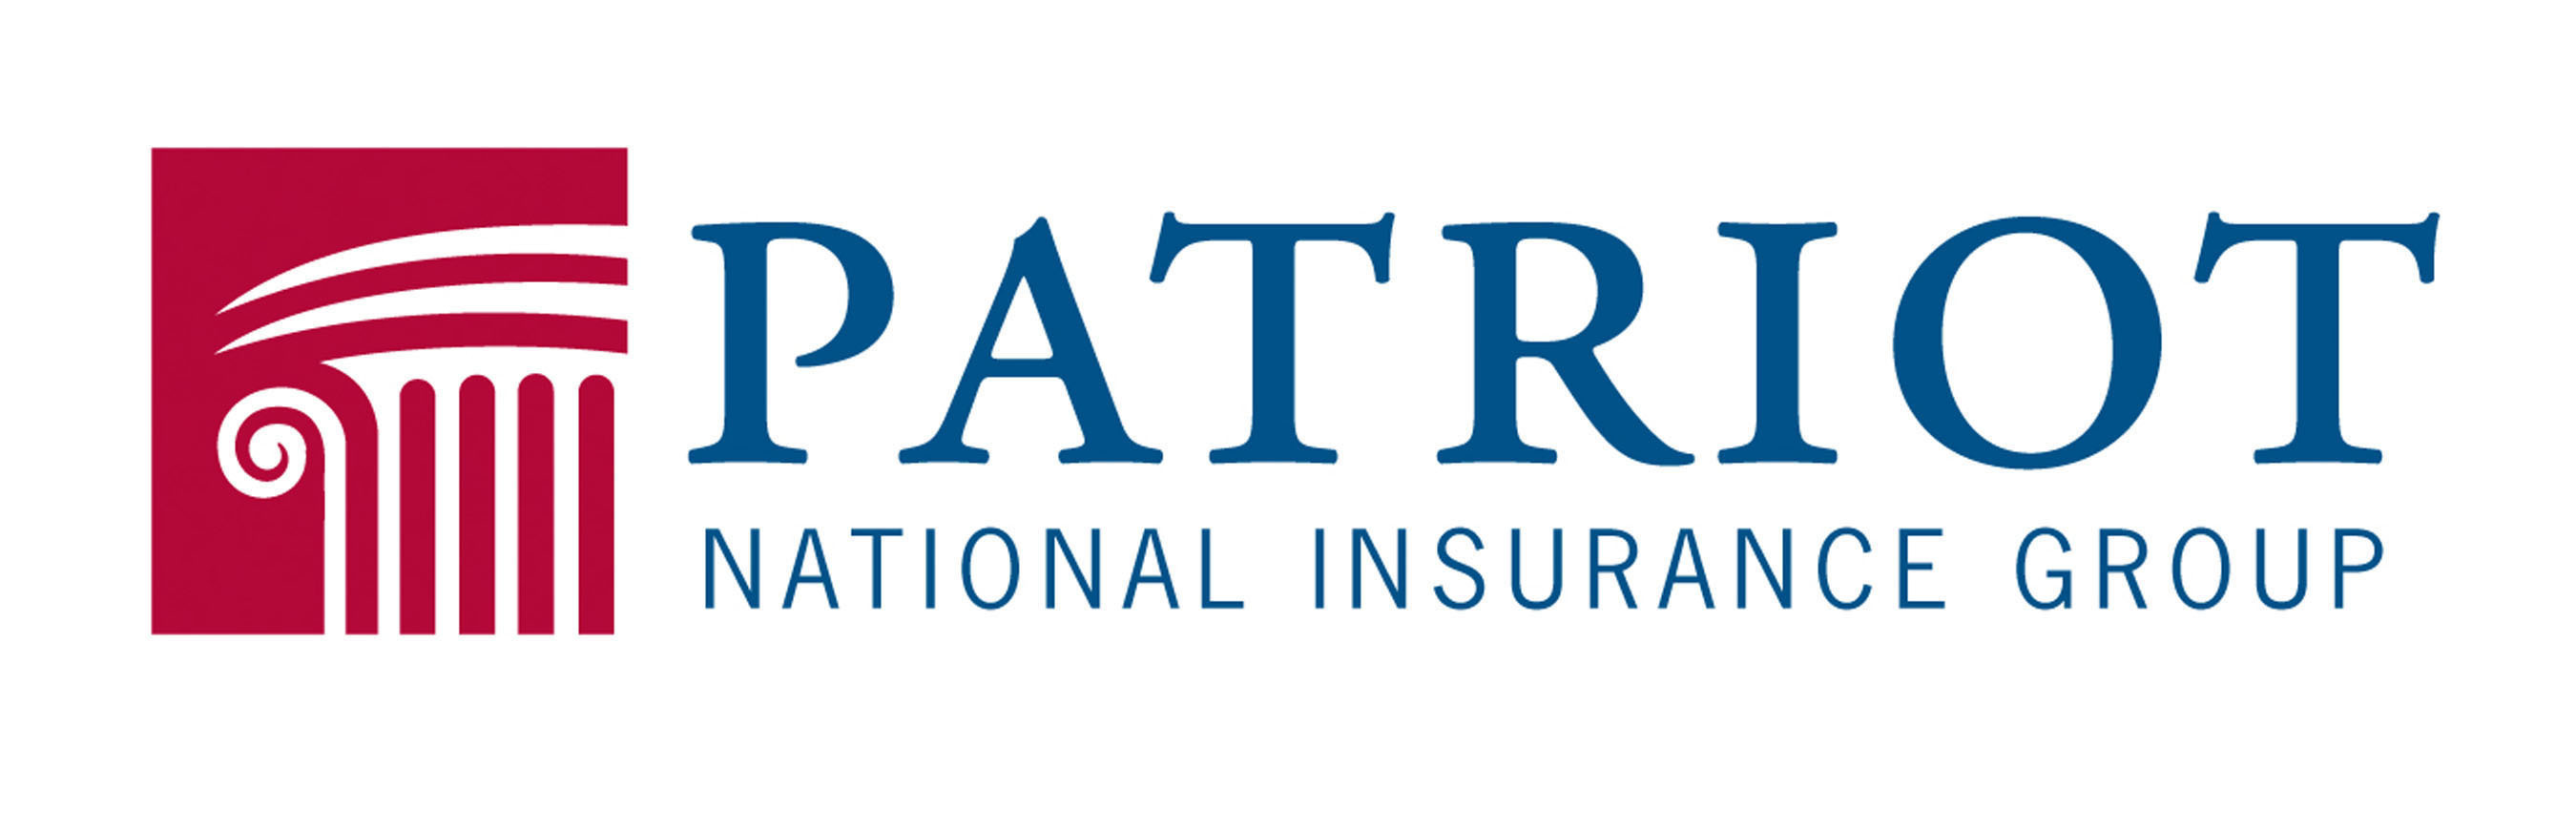 Patriot National Insurance Group Logo. (PRNewsFoto/Patriot National Insurance Group) (PRNewsFoto/)